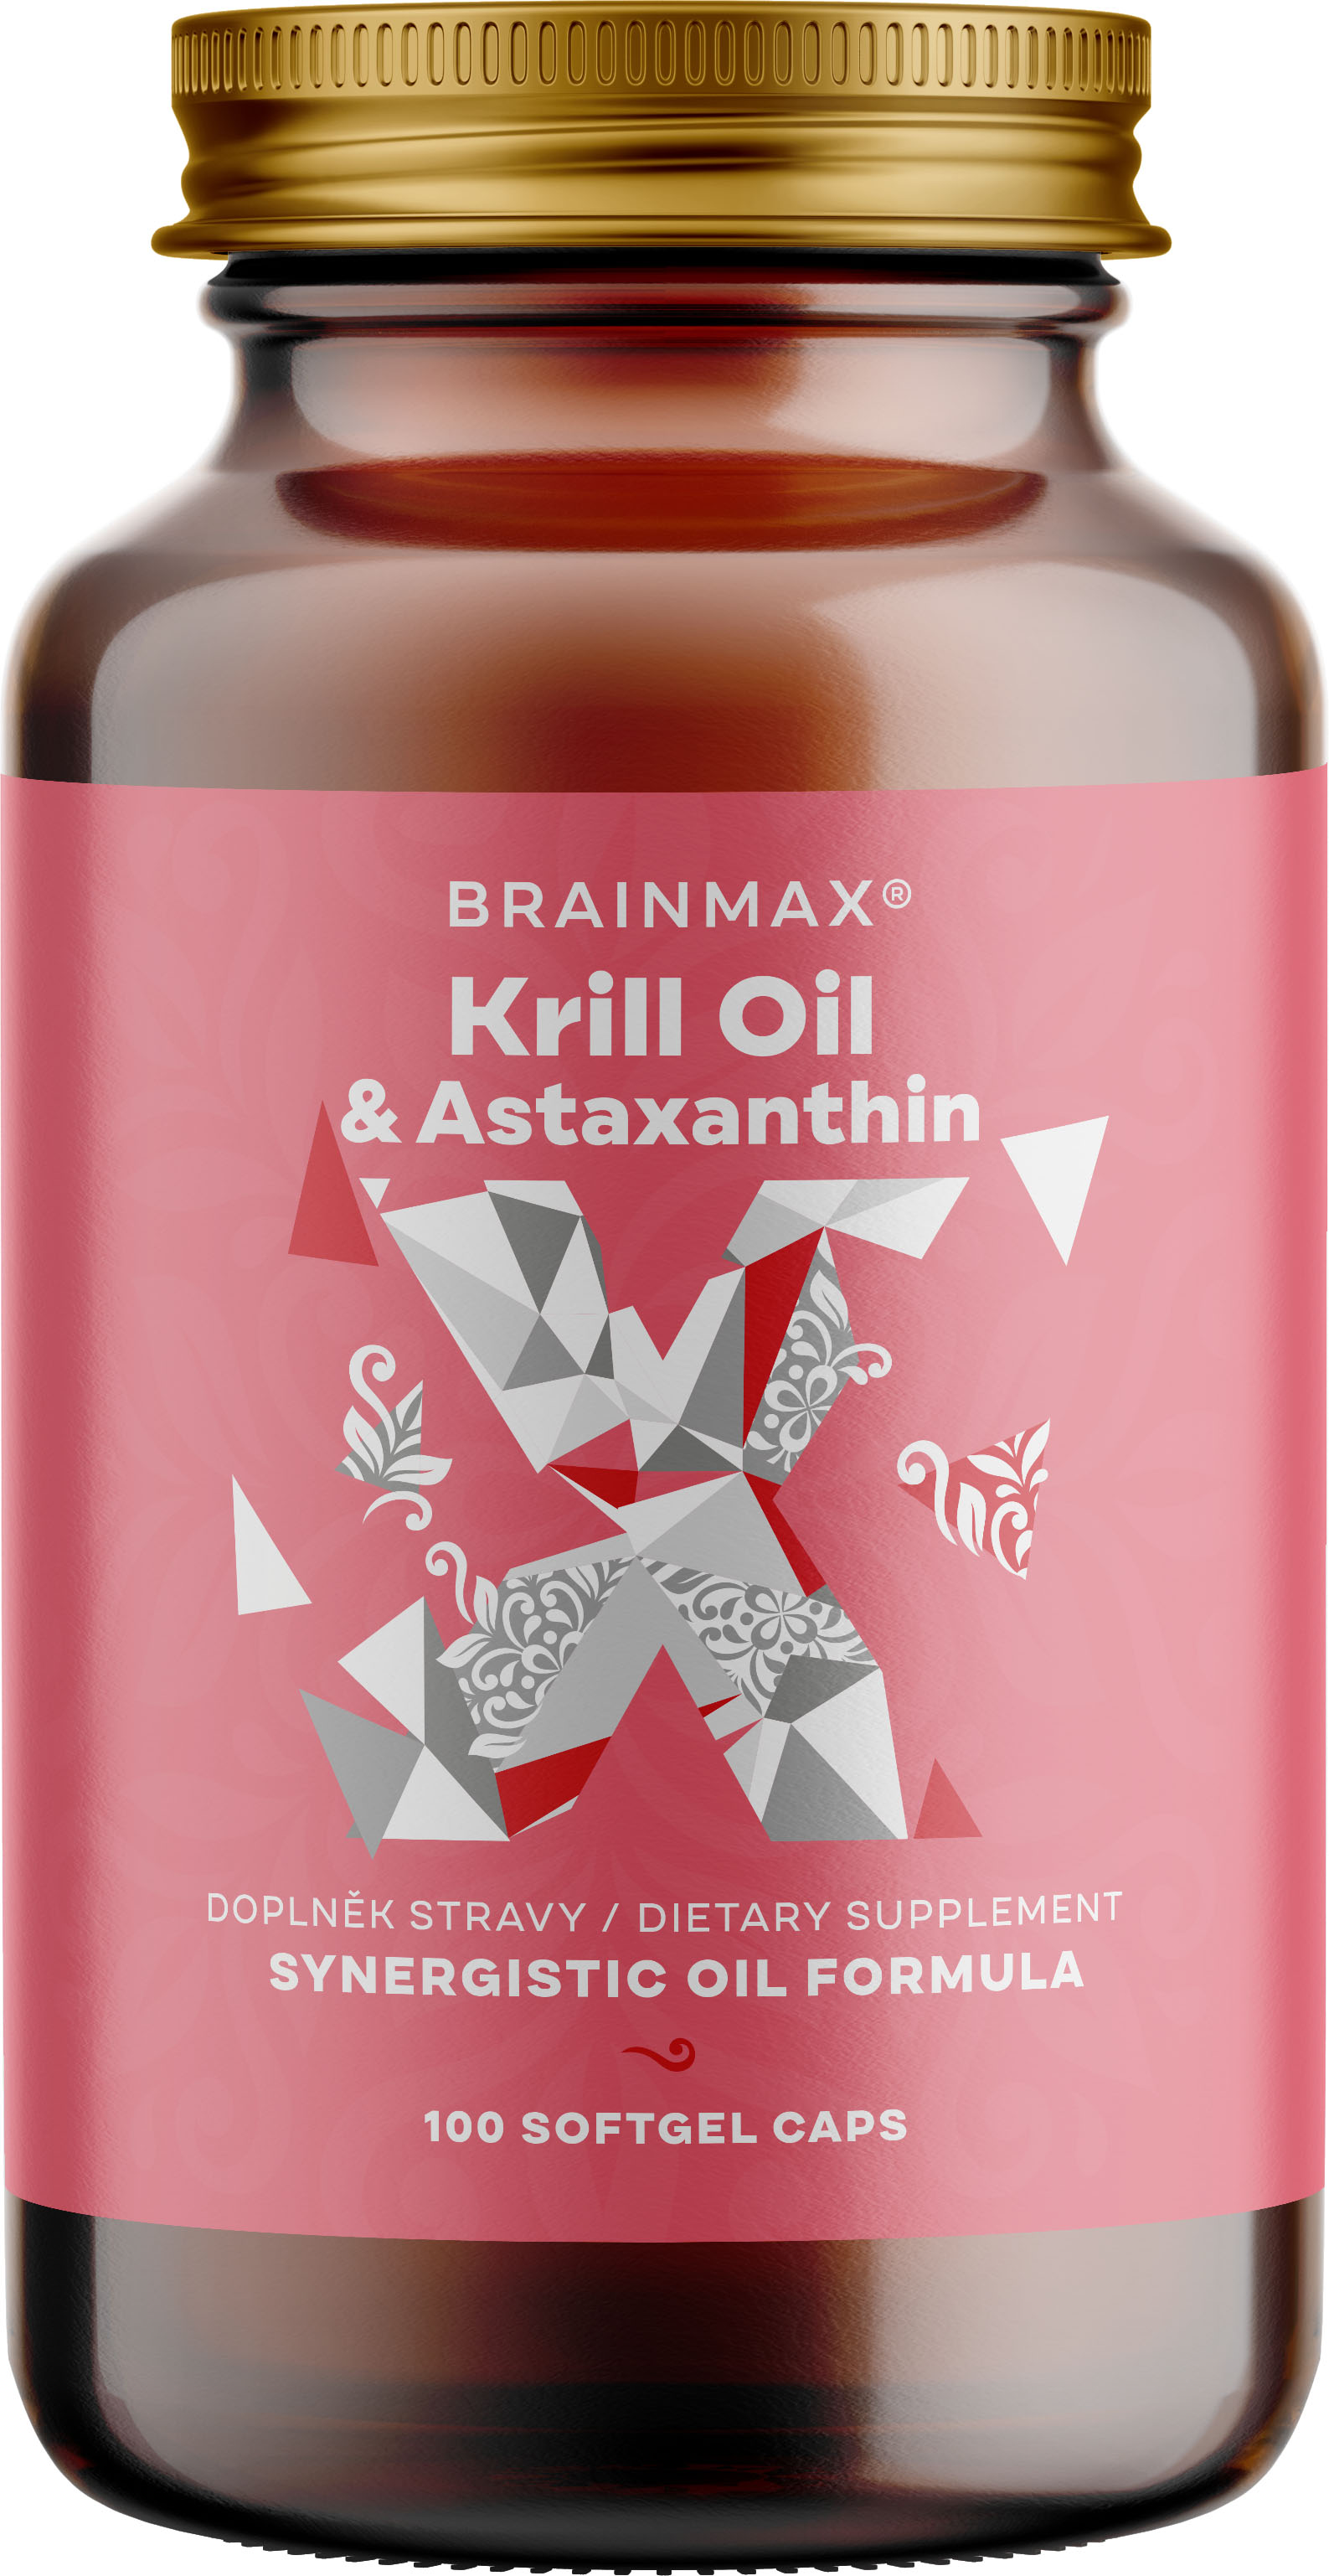 BrainMax Krill Oil s astaxanthinem, 500 mg, 100 softgel kapslí Omega 3 olej z krillu s astaxanthinem a fosfolipidy, doplněk stravy